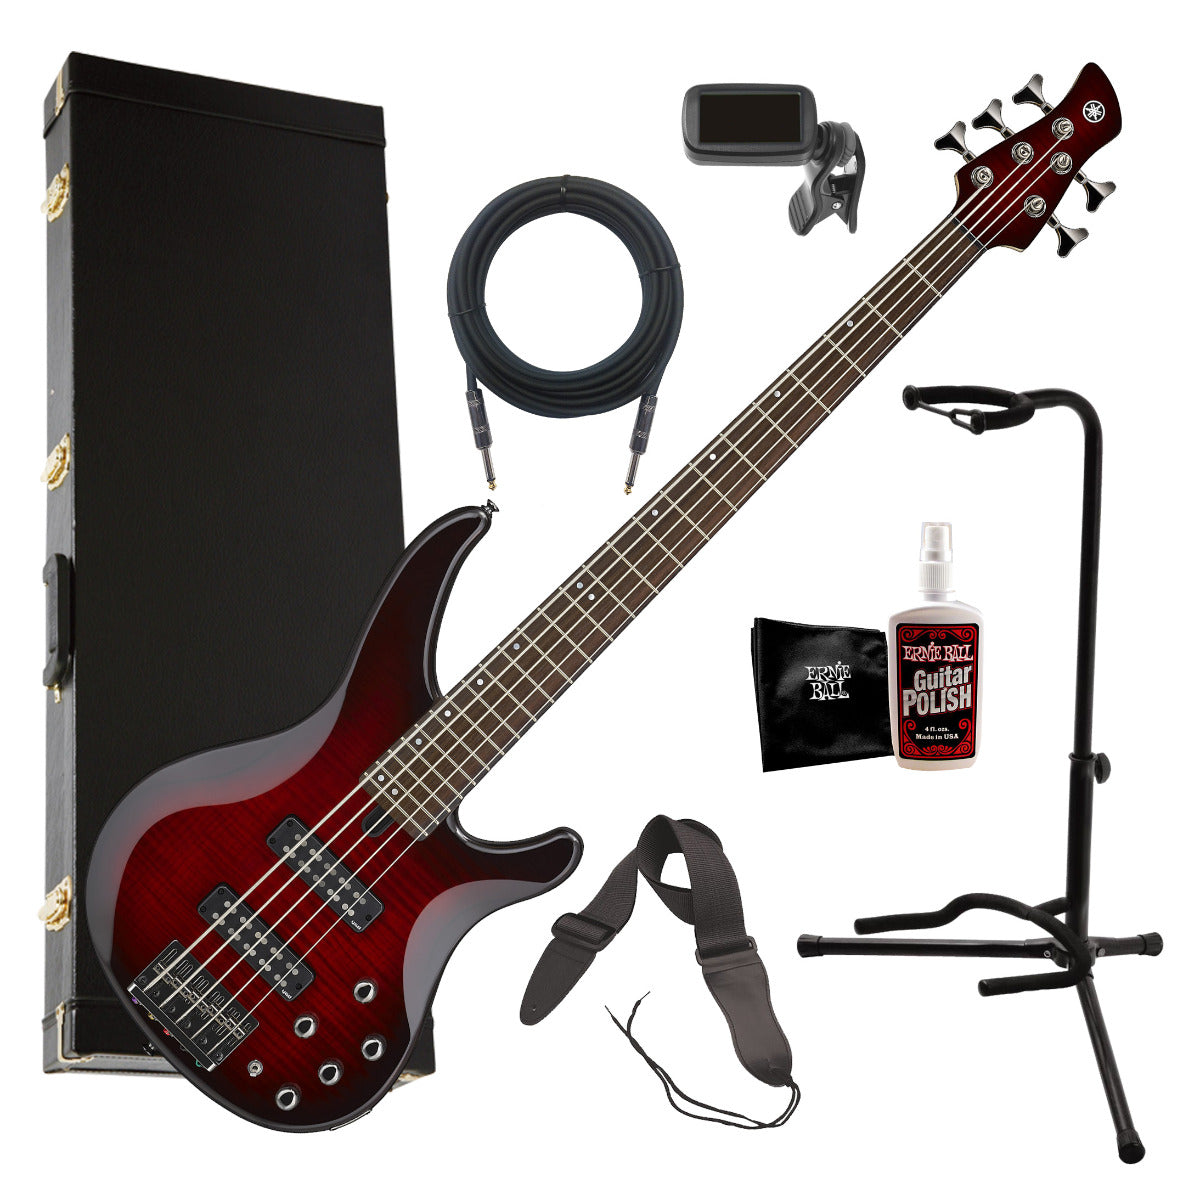 Yamaha TRBX605FM 5-String Electric Bass Guitar - Red Burst COMPLETE BASS BUNDLE